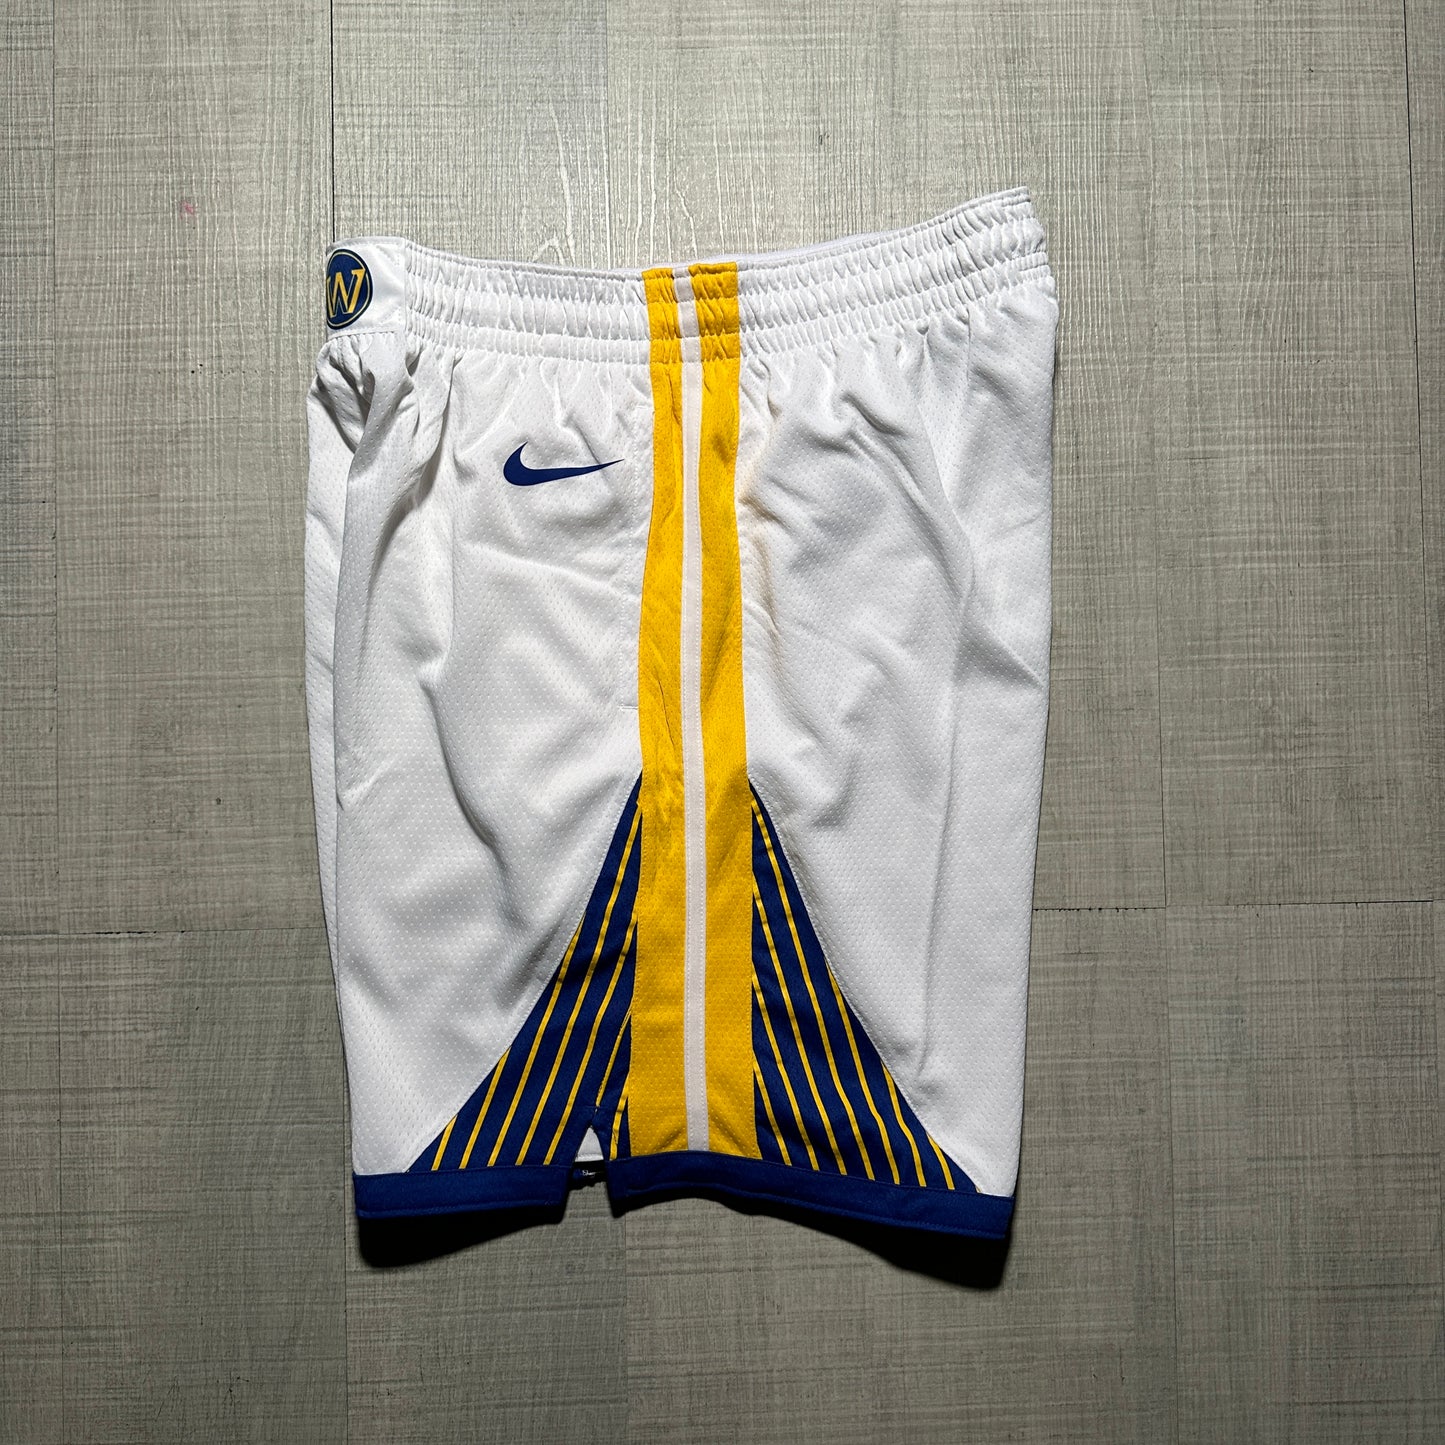 Golden State Warriors Association Edition Nike Shorts